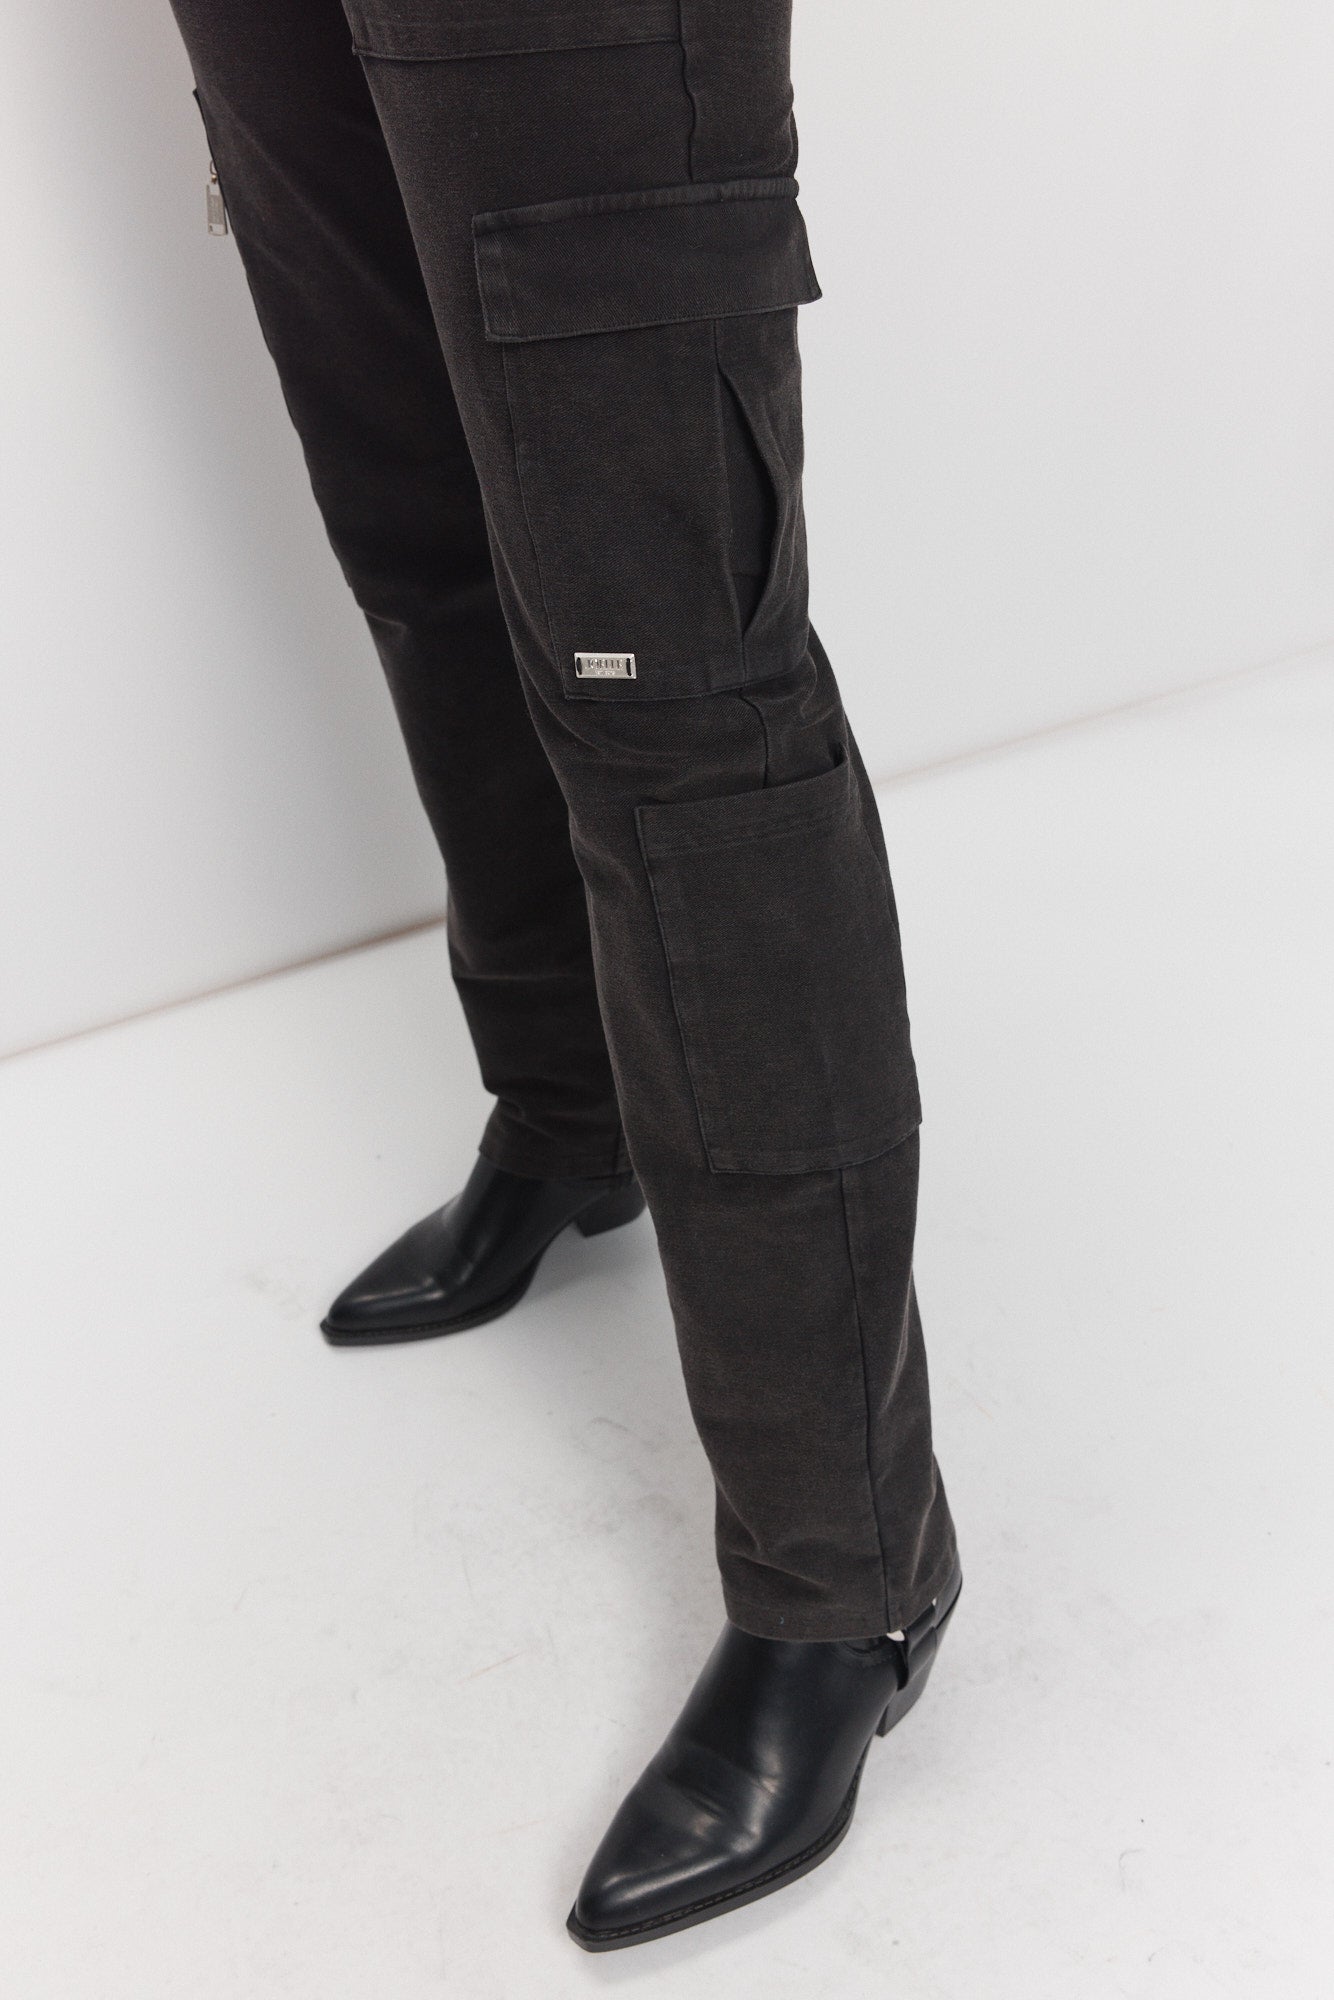 Gray tie-dye military style cargo pants | Pat